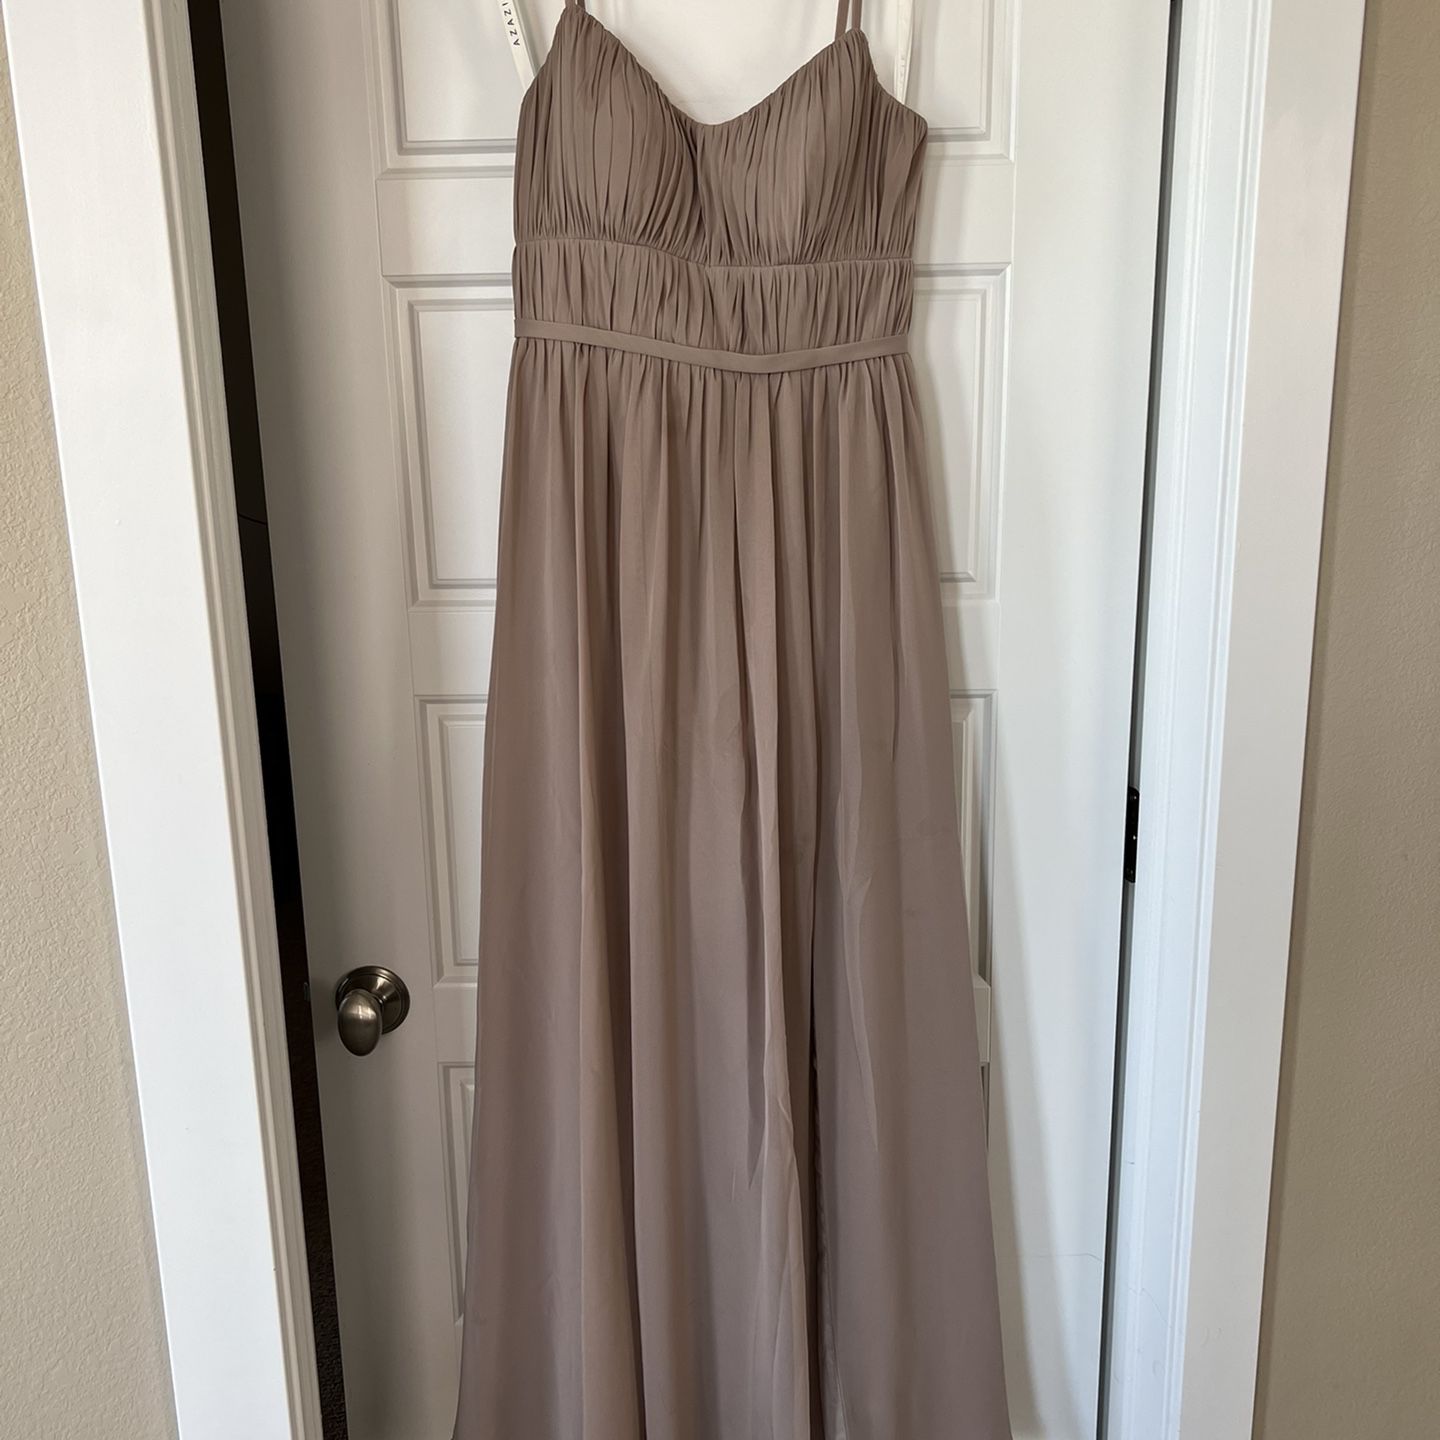 Taupe Bridesmaid Dress - Size 6 (fits like a 4)